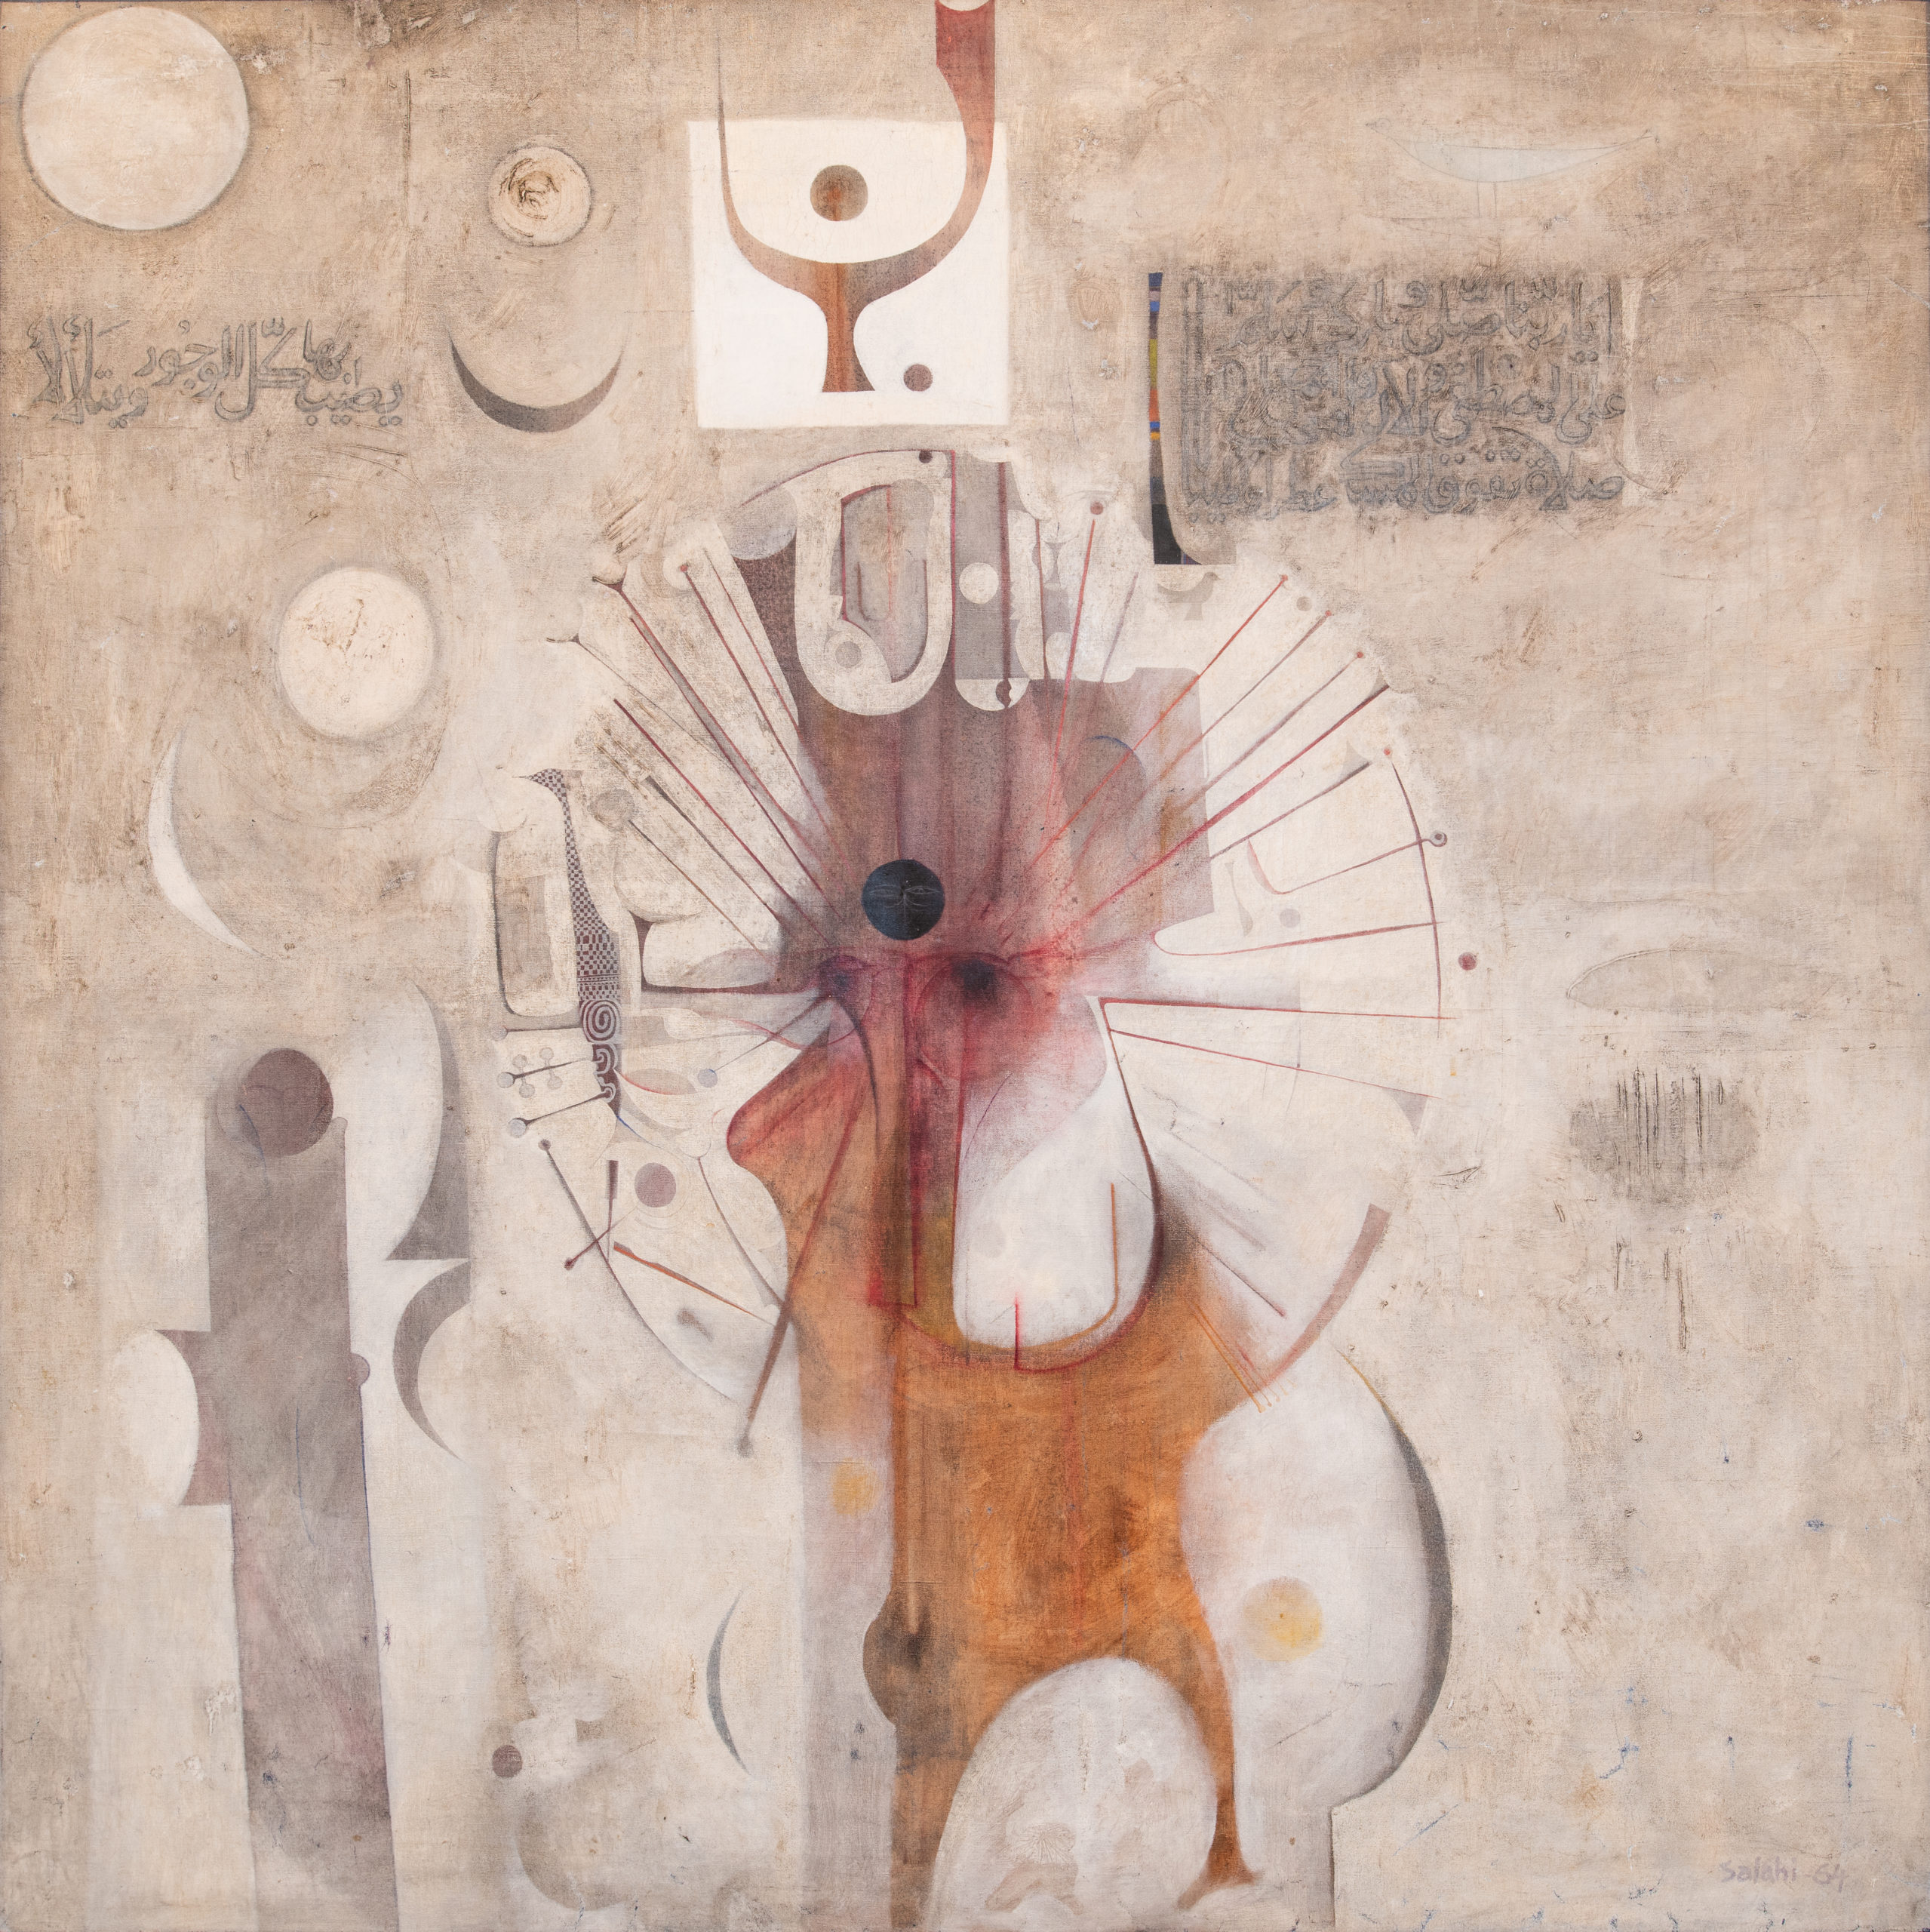 Ibrahim El-Salahi, The Last Sound, 1964, Oil on canvas, 121.5 × 121.5 cm. Image courtesy of Barjeel Art Foundation, Sharjah. 